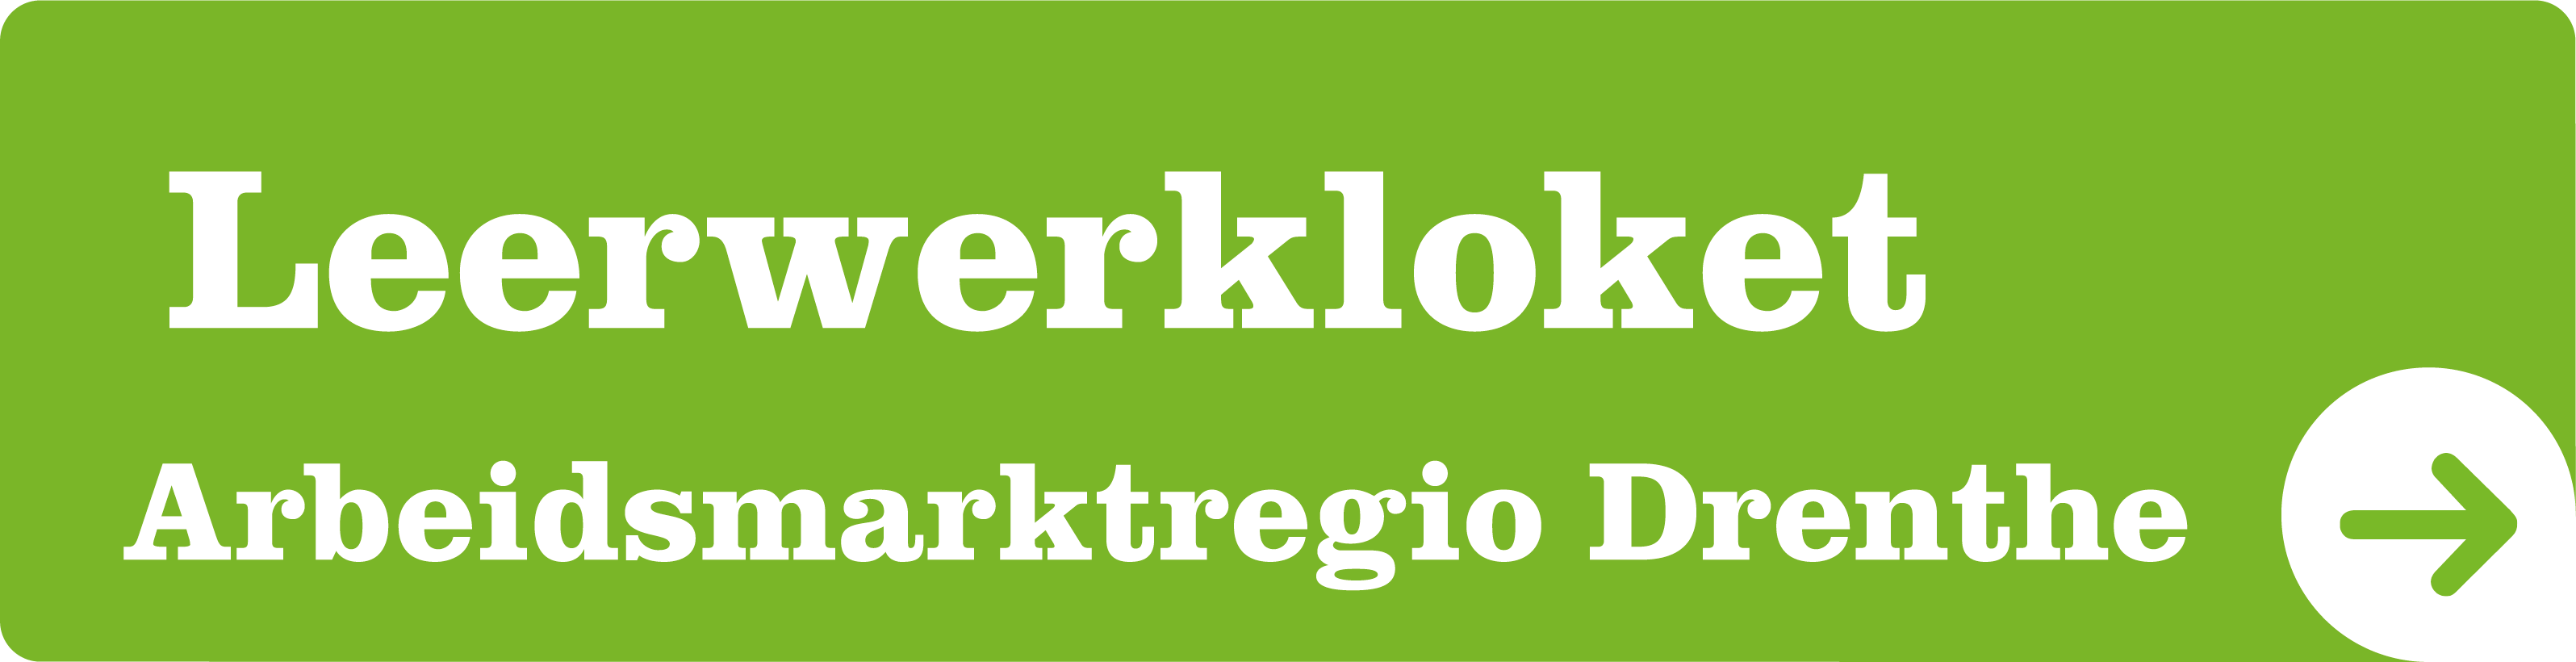 Leerwerkloket Arbeidsmarktregio Drenthe